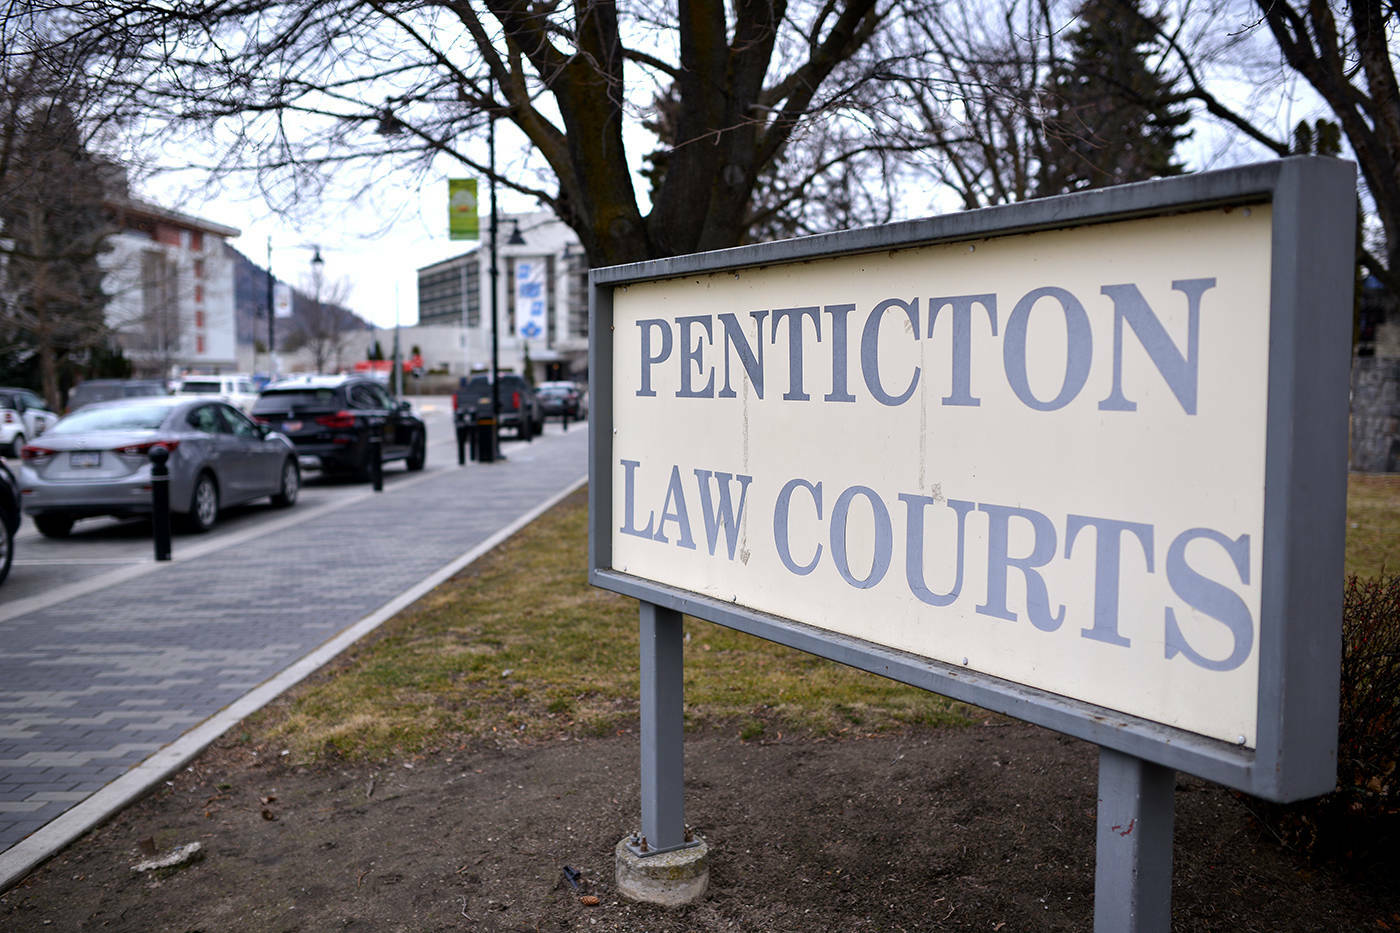 Penticton law courts. (File photo)